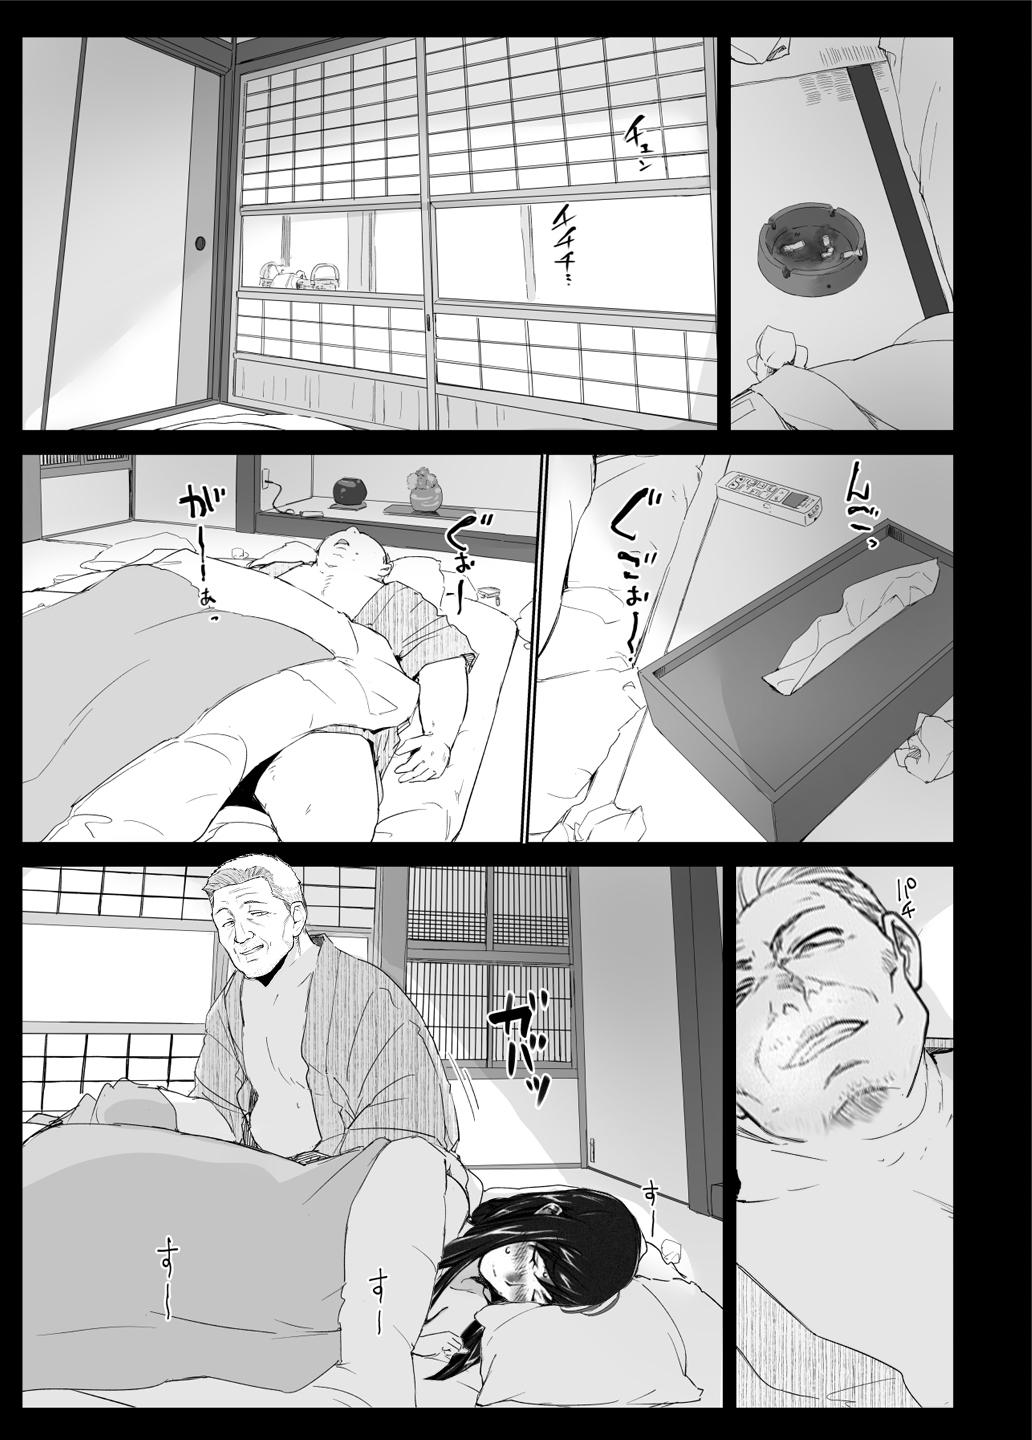 Sakiko-san in delusion Vol.1 Ver.1.1 ~Sakiko-san's circumstance at an educational training~ Stupid Sakiko (collage) on-going 151